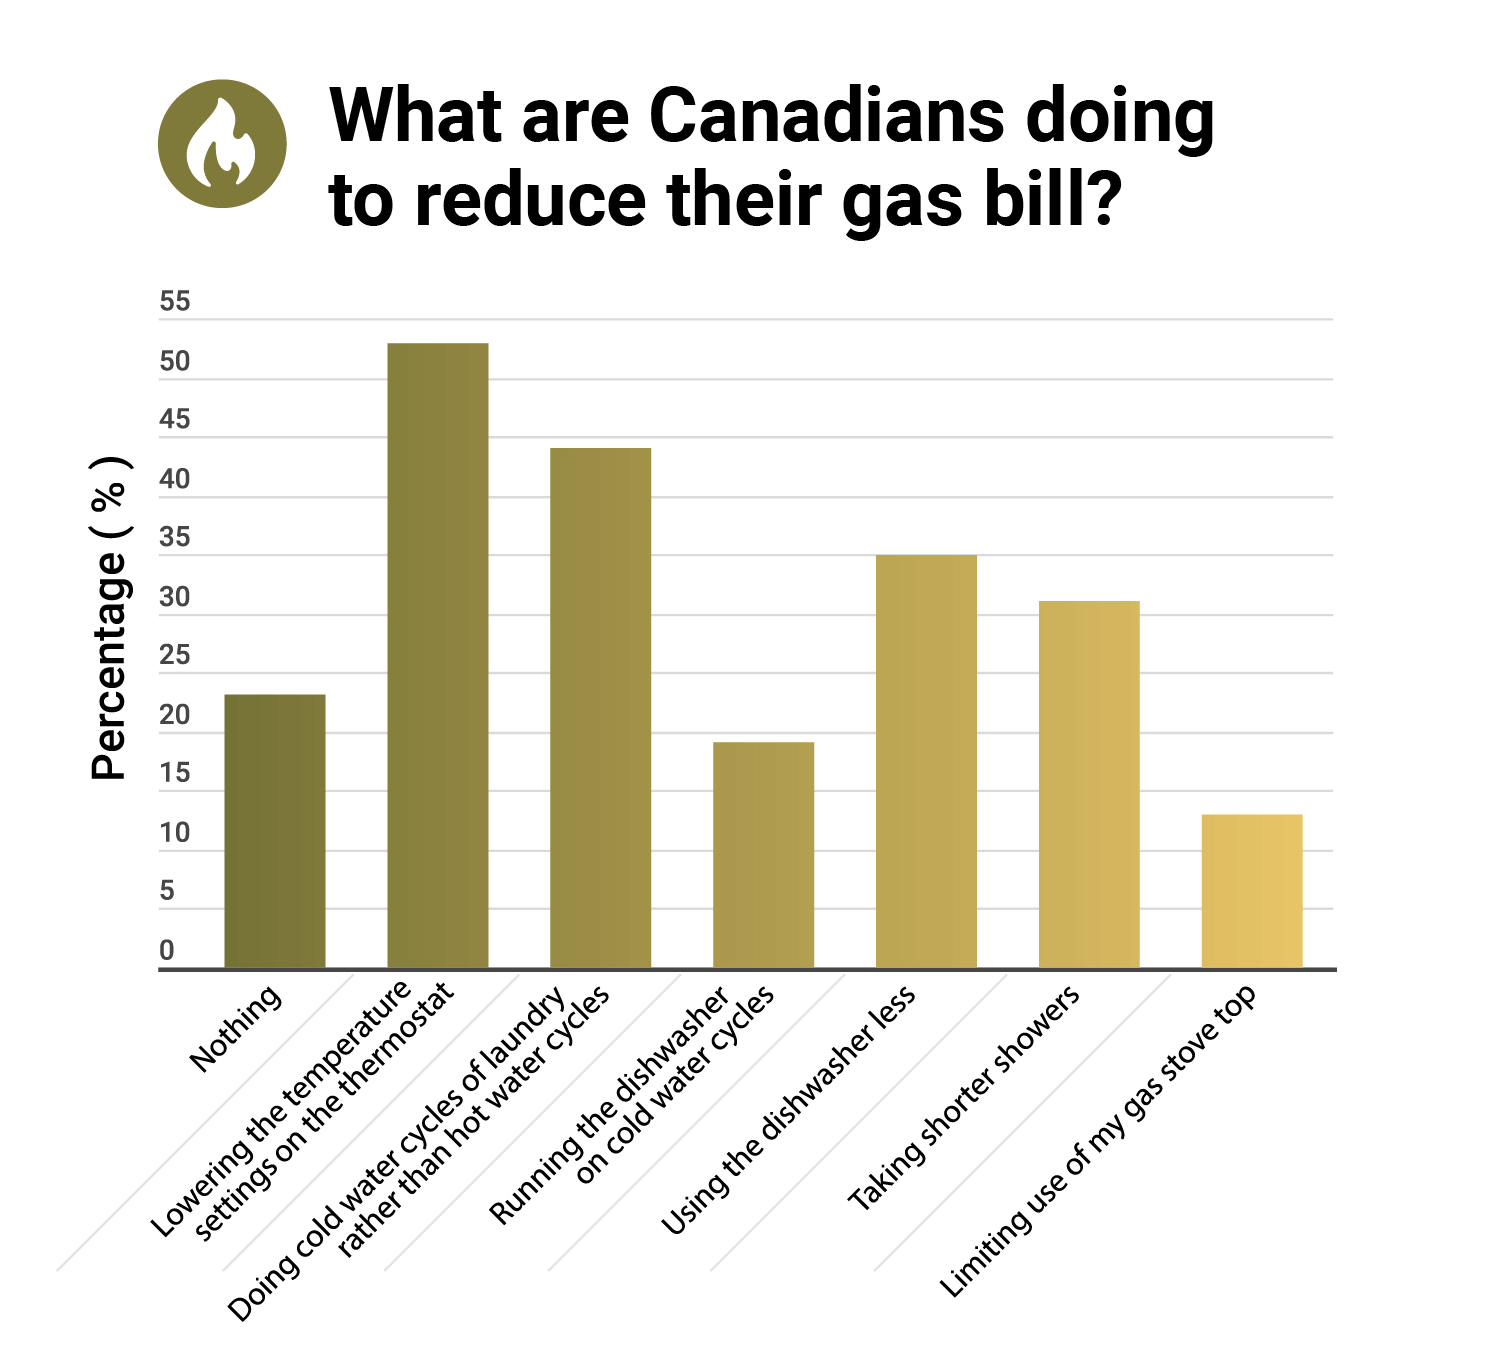 A bar chart showing how Canadians combat gas bills